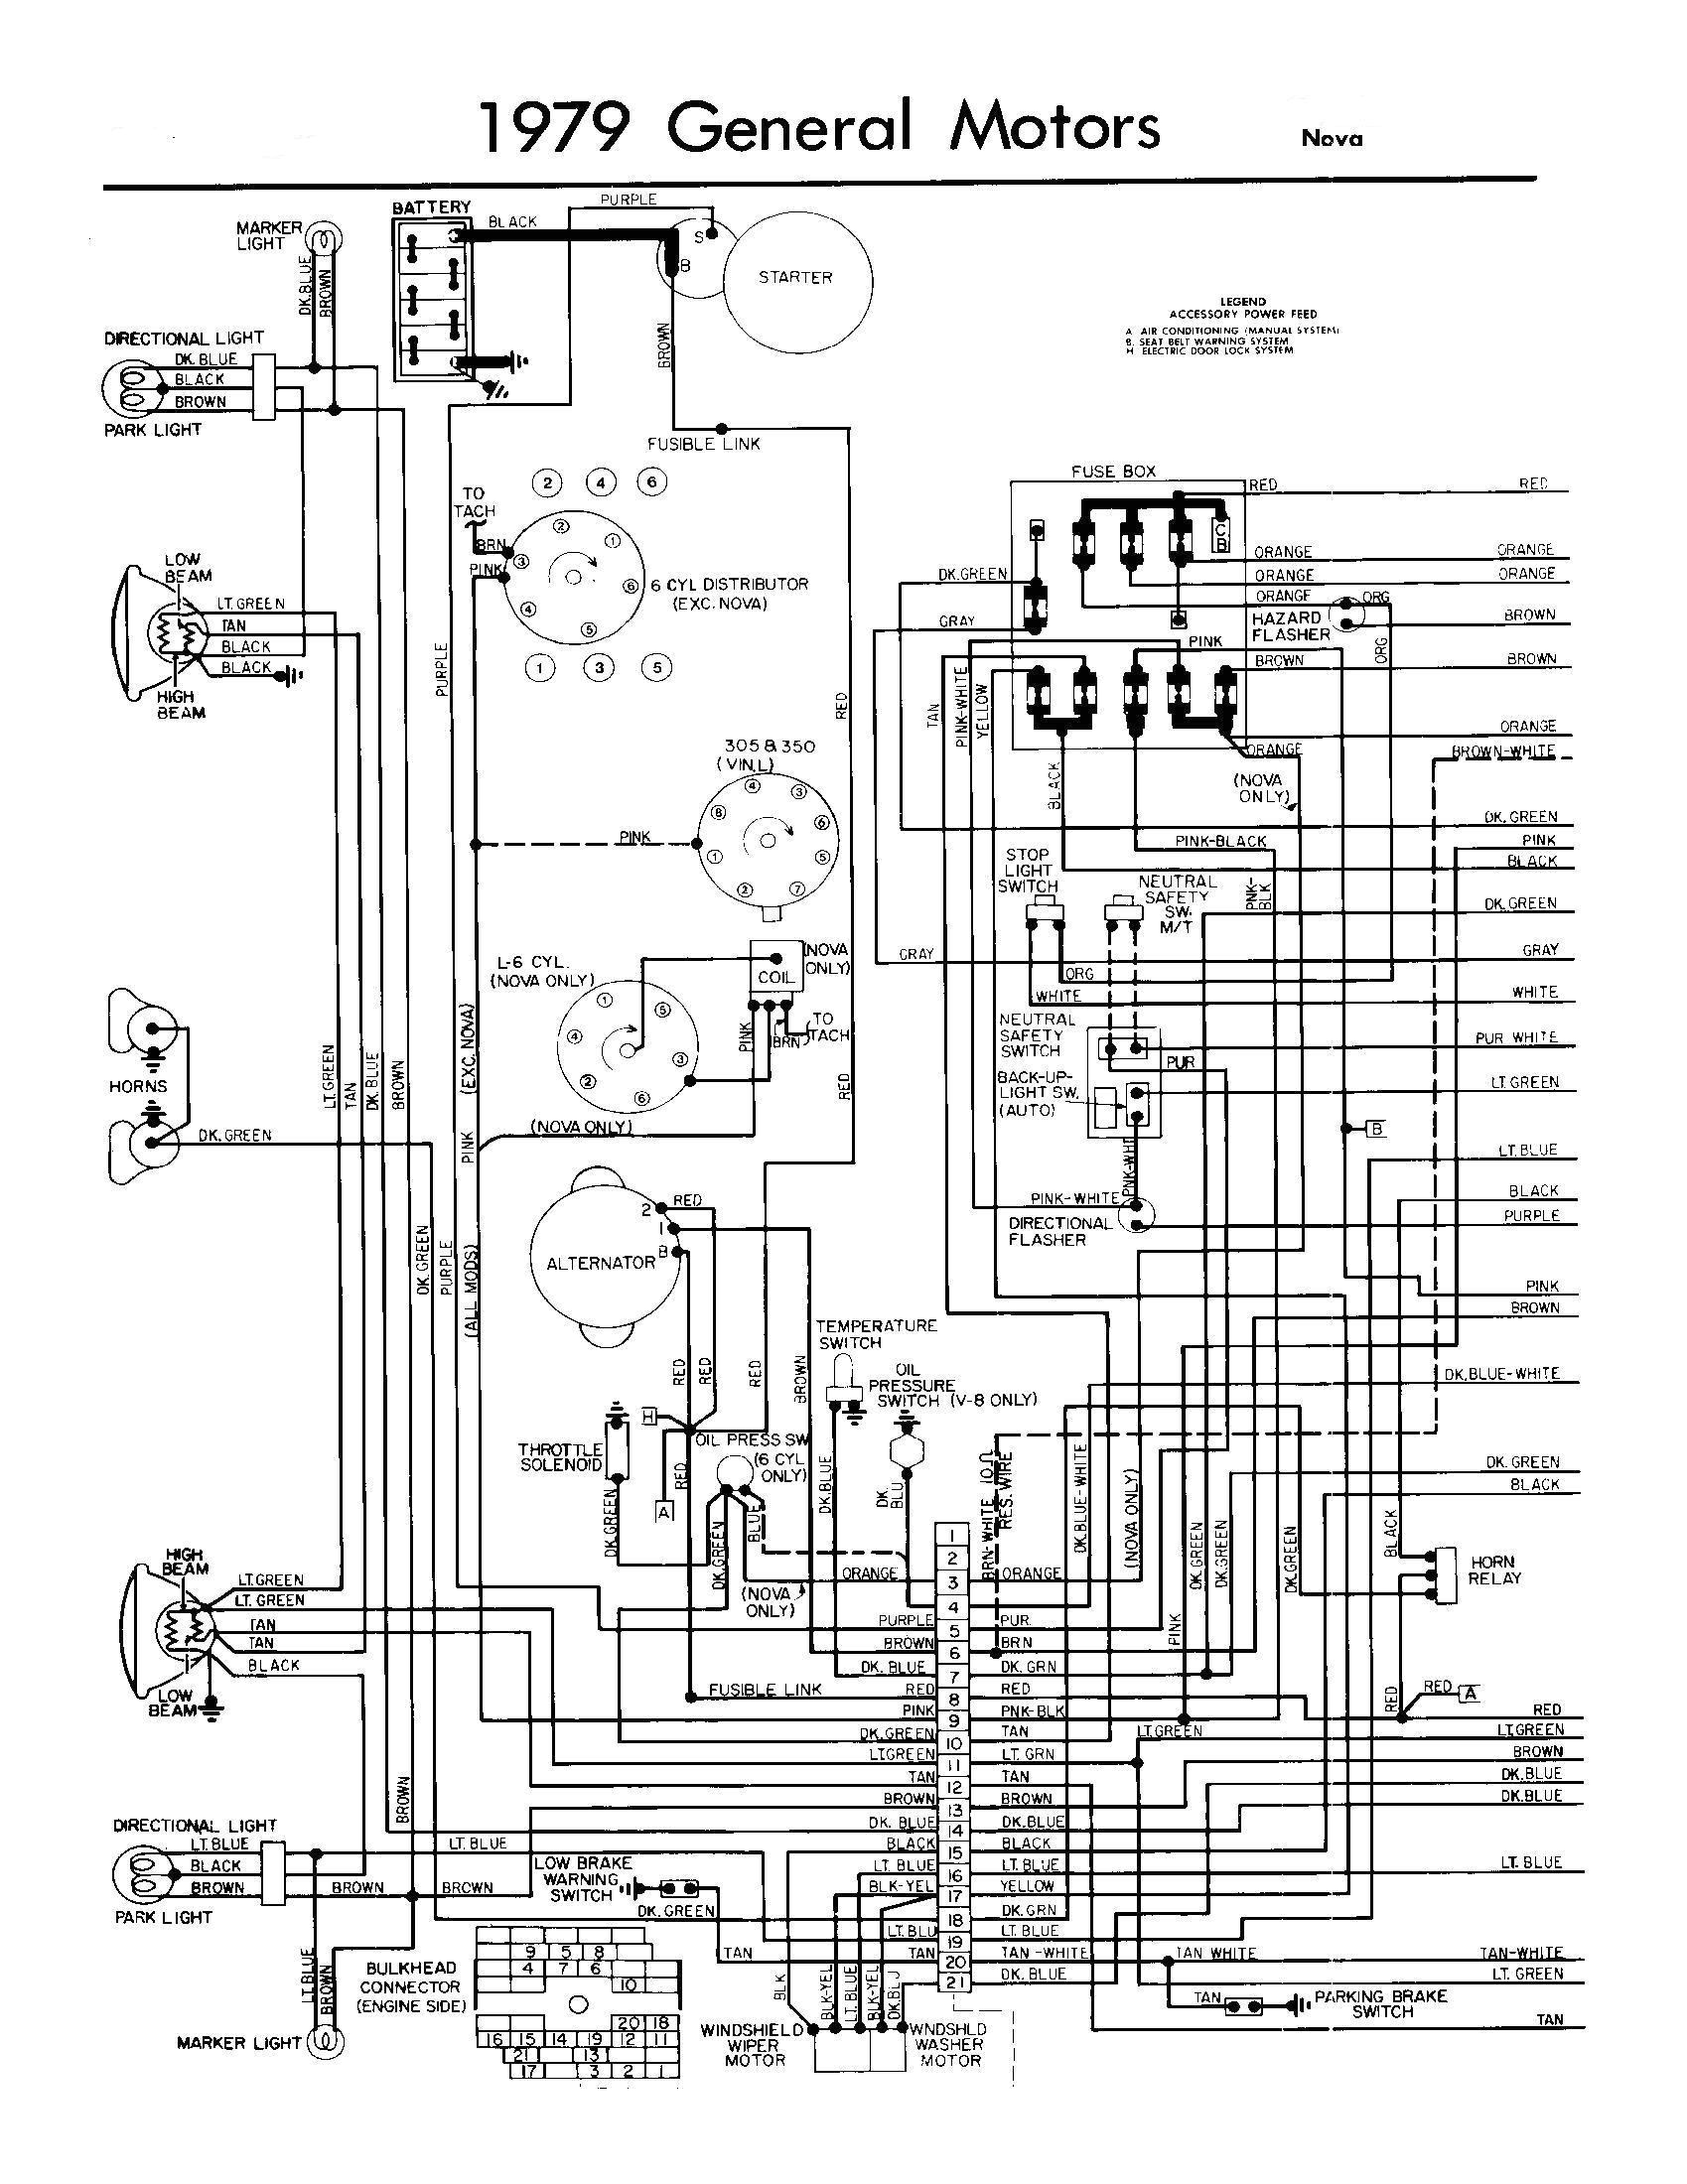 wiring diagrams for chevy trucks all generation wiring schematics chevy nova forum of wiring diagrams for chevy trucks jpg